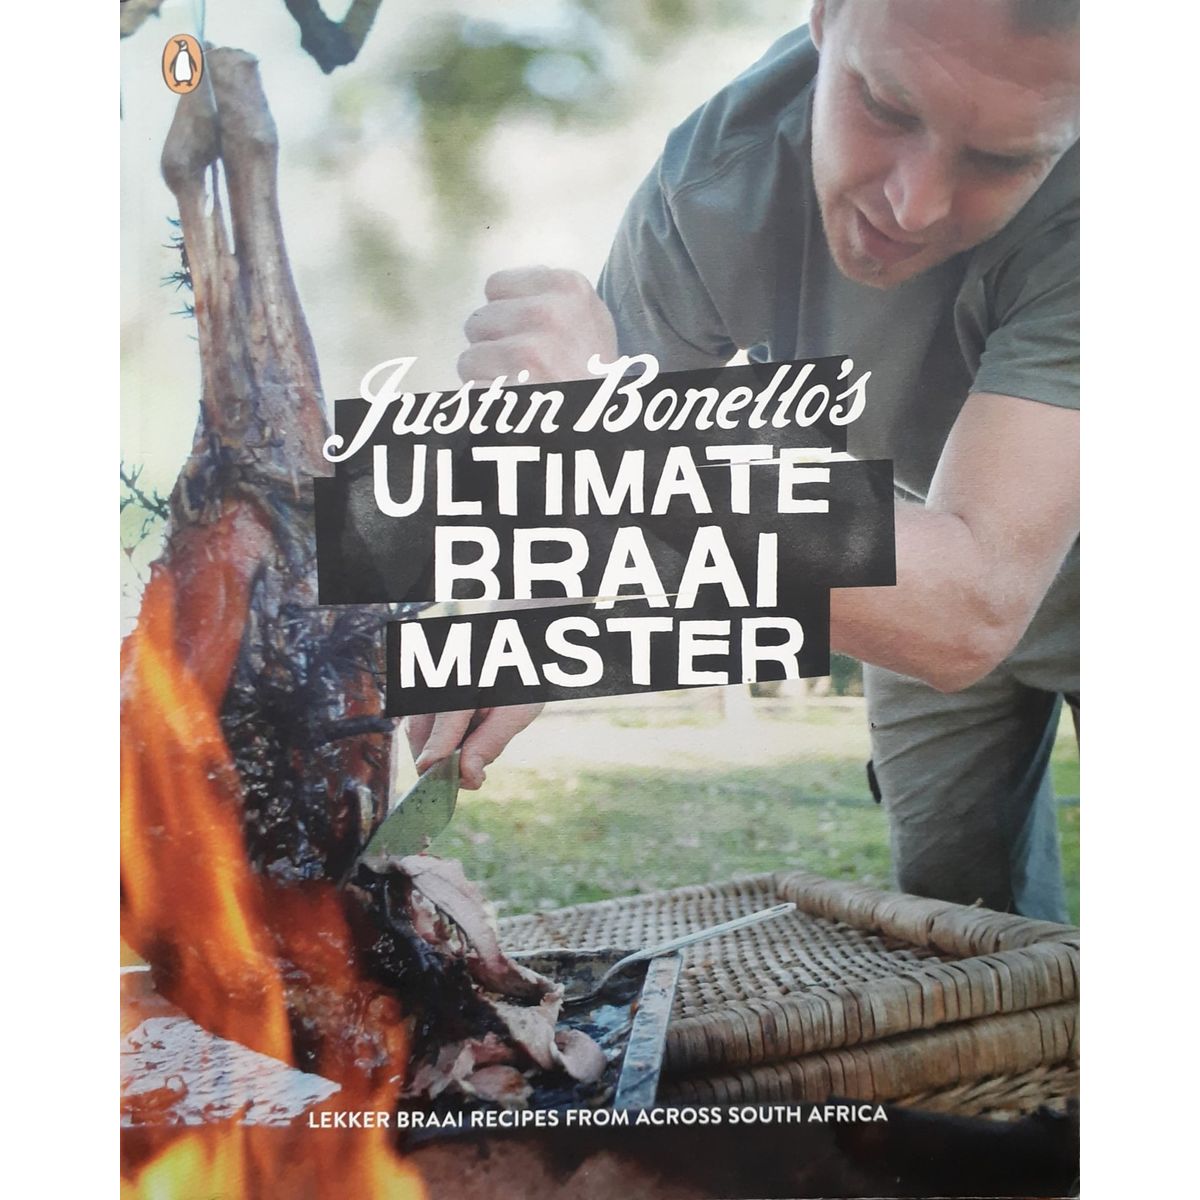 ISBN: 9780143530459 / 0143530453 - Justin Bonello's Ultimate Braai Master by Justin Bonello, Signed by Author [2012]